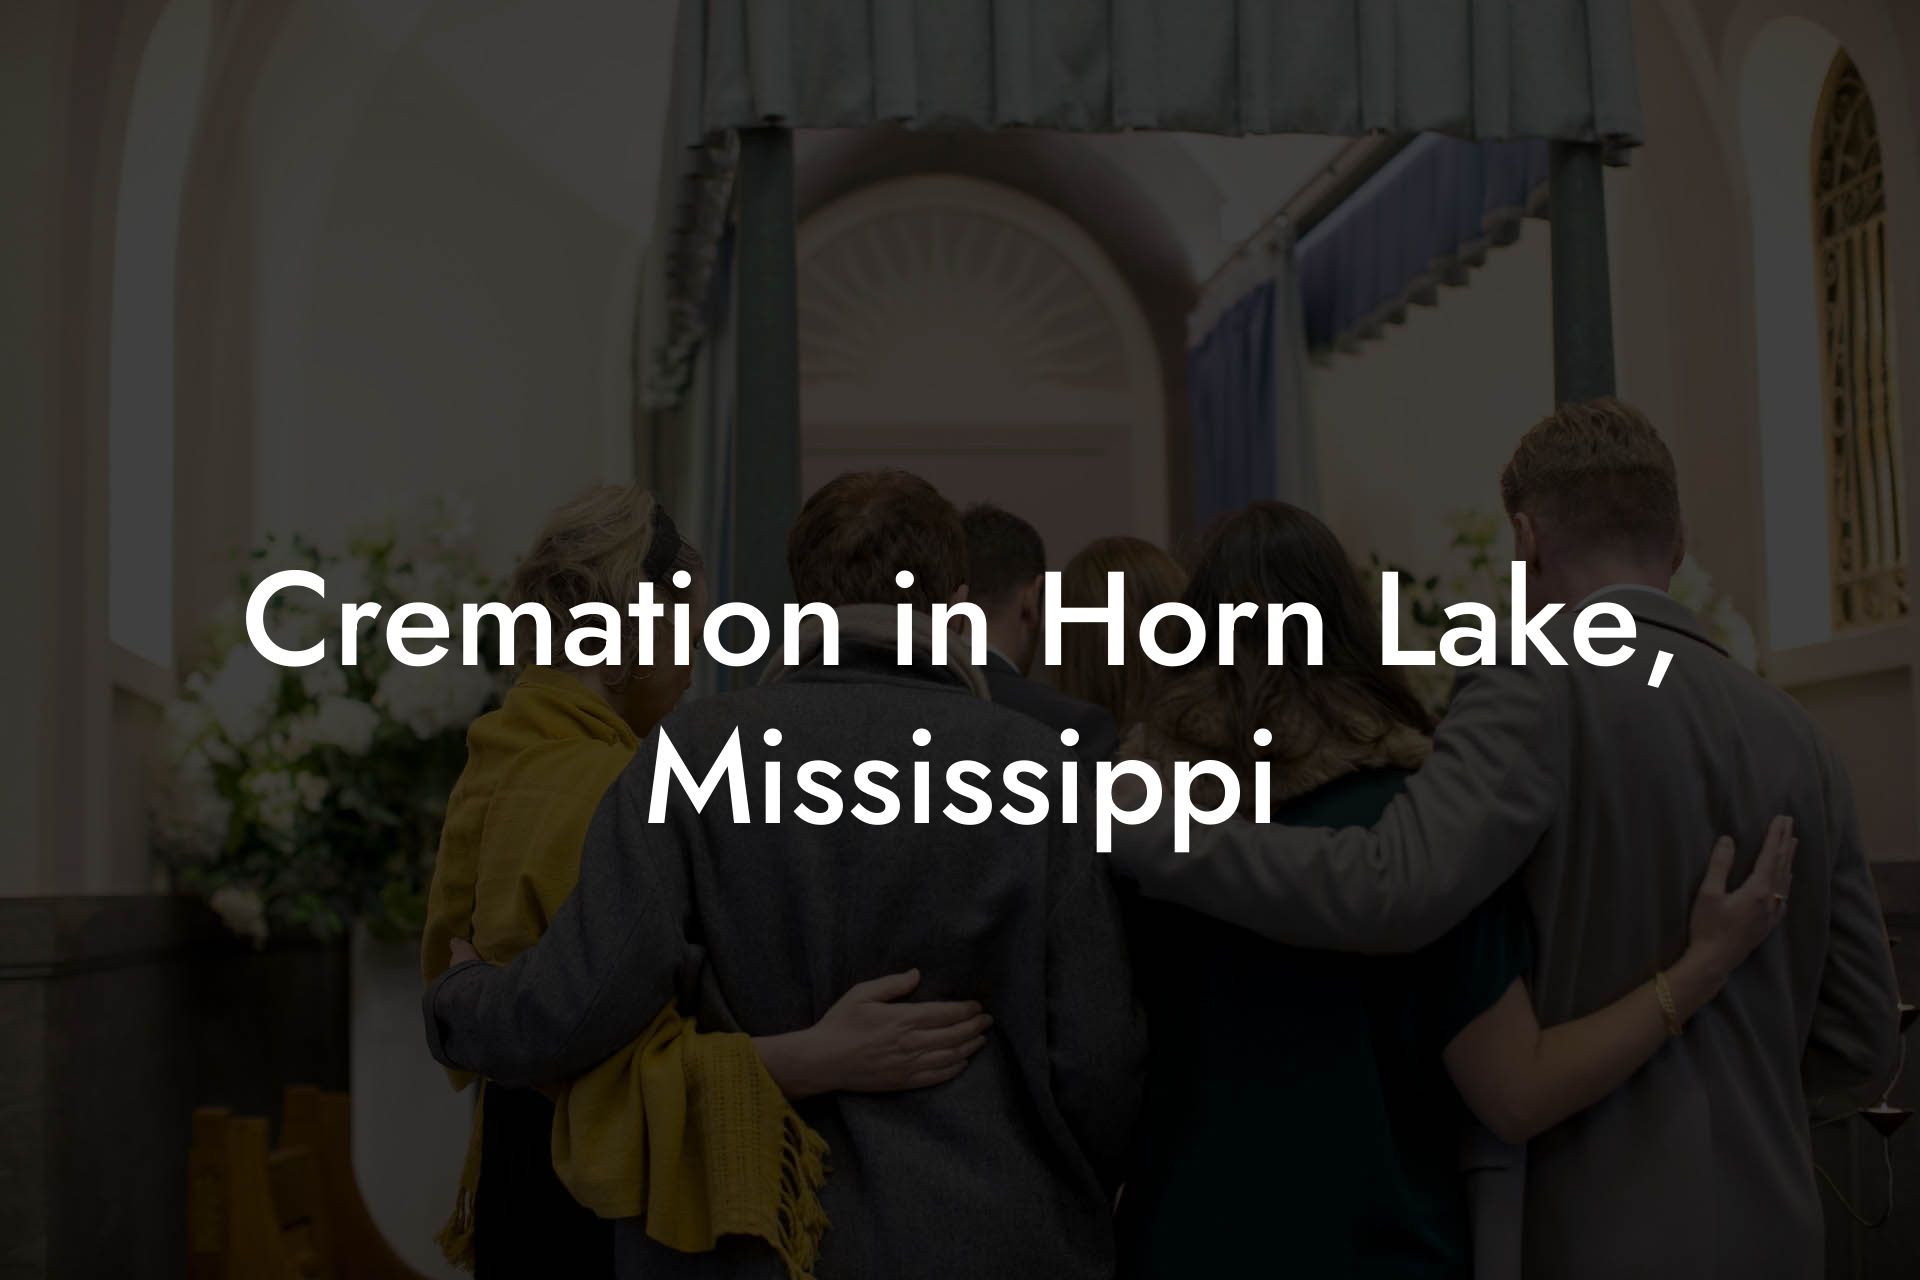 Cremation in Horn Lake, Mississippi